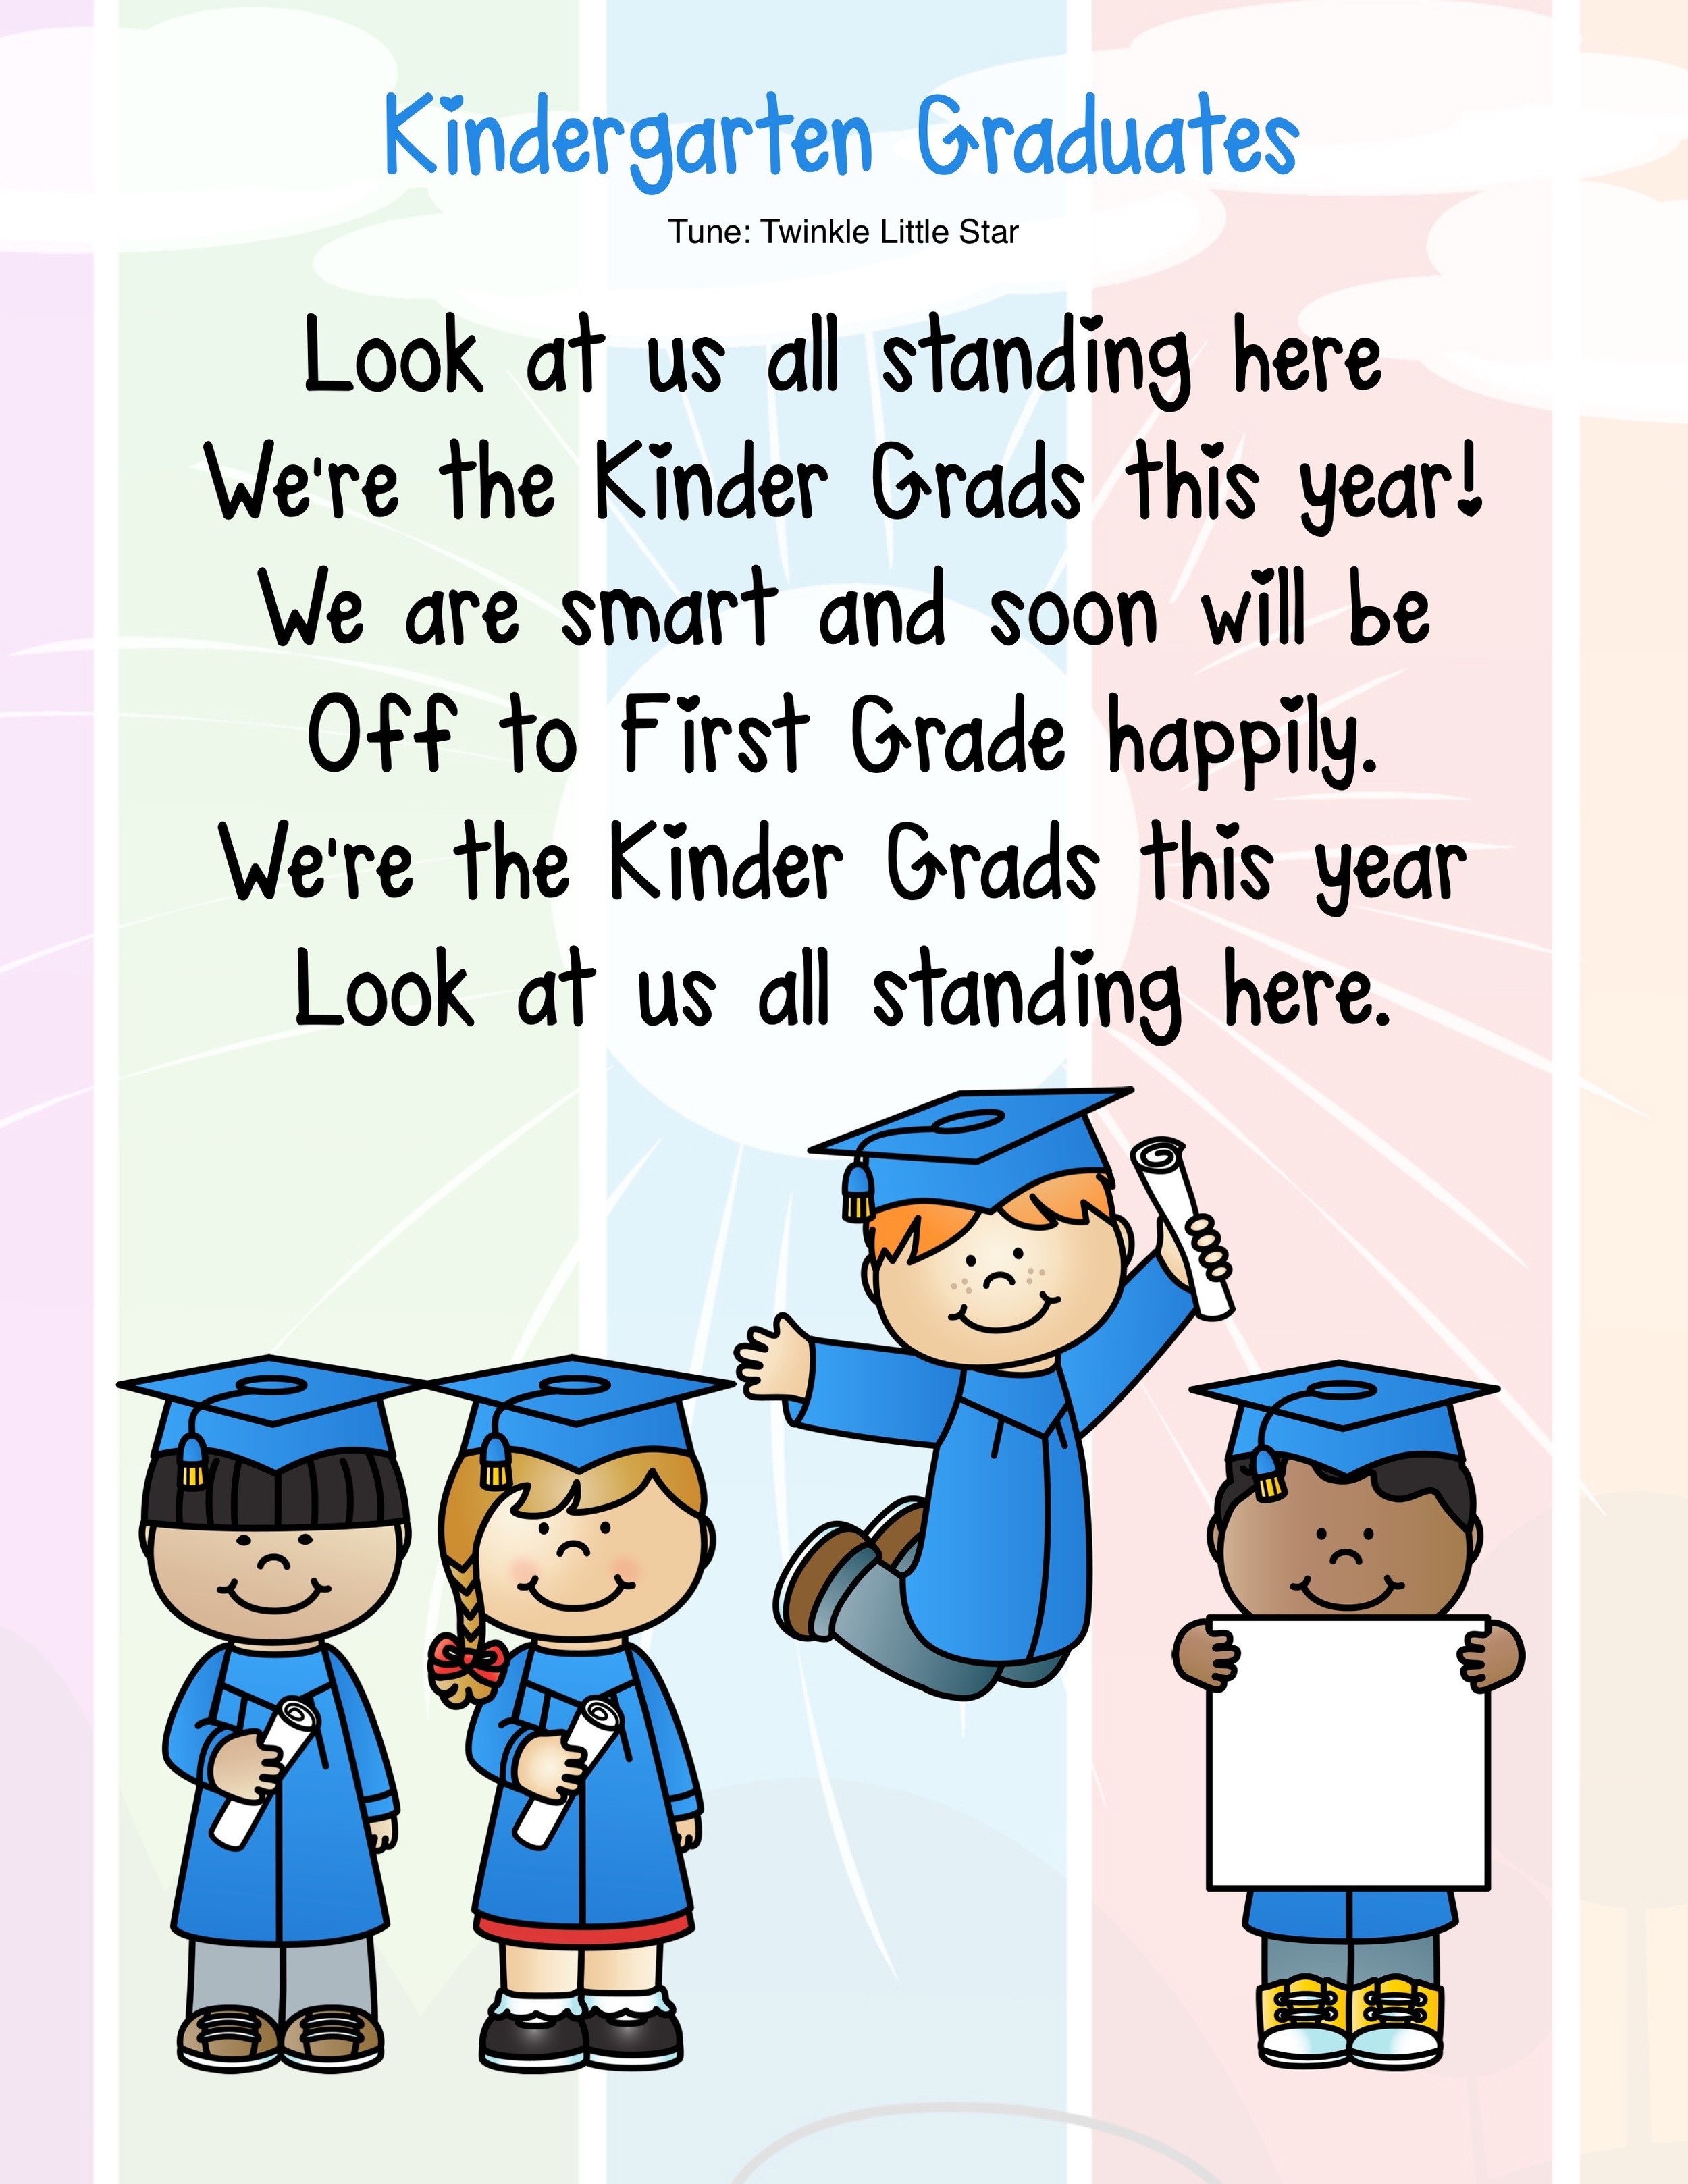 Kindergarten or Preschool Graduation EndoftheYear Program Songs and